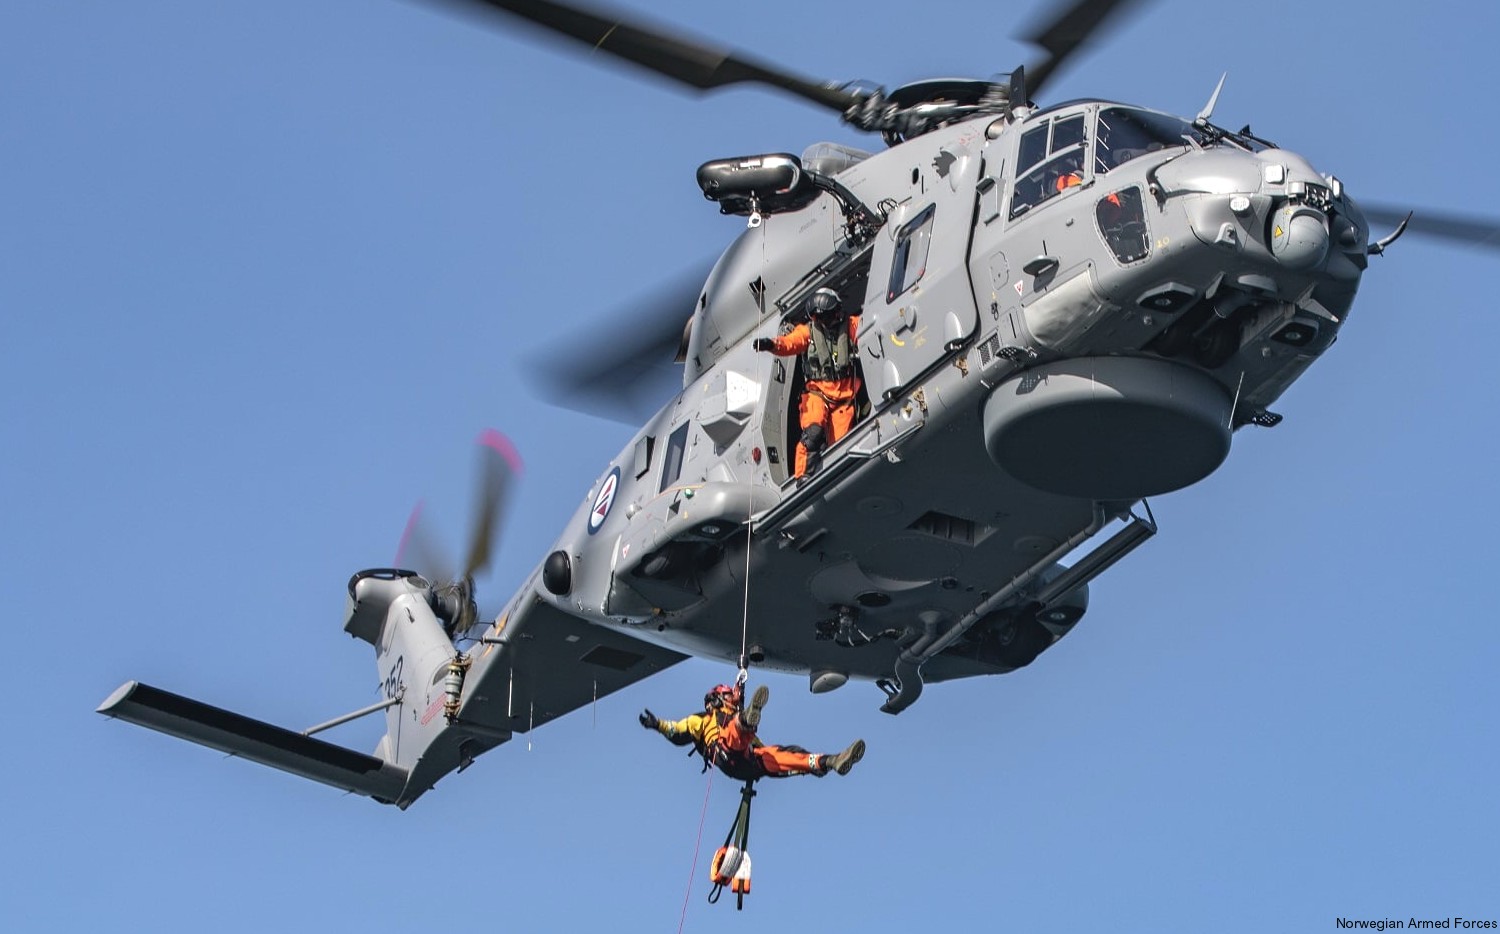 nh90 nfh asw helicopter royal norwegian coast guard navy air force kystvakt sjoforsvaret 352 02